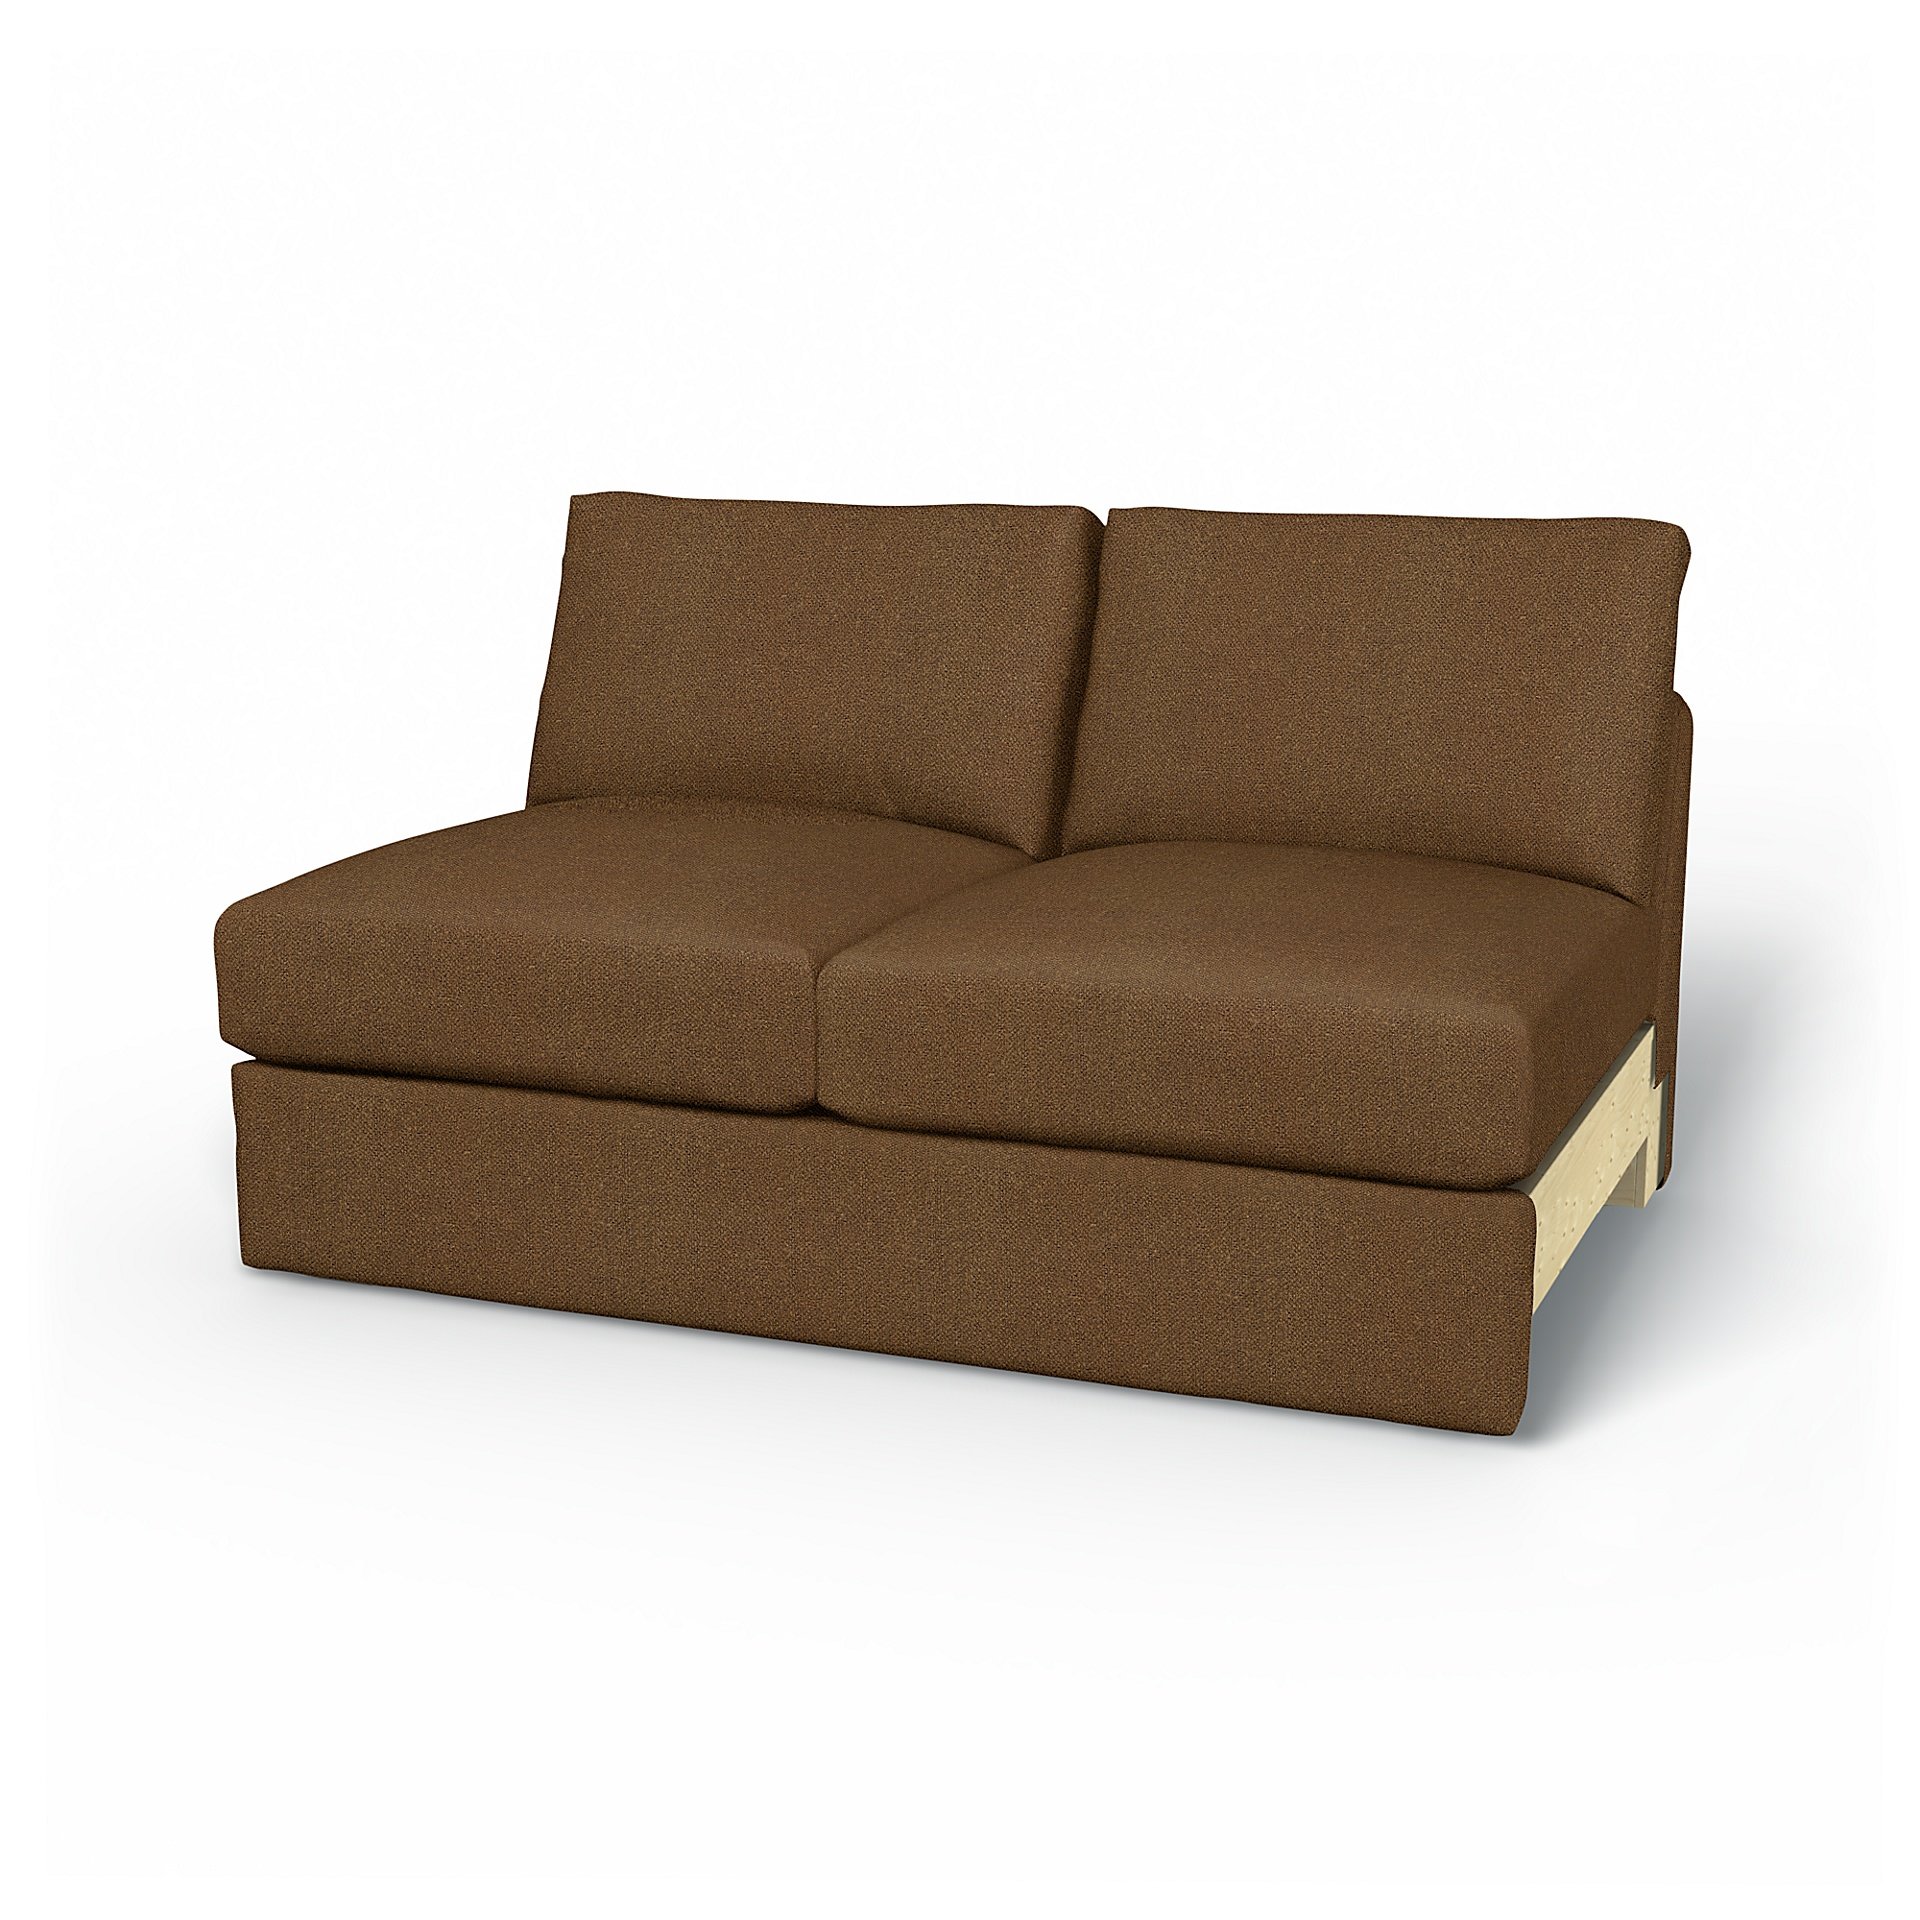 IKEA - Vimle 2 seater bed sofa without armrests, Auburn, Boucle & Texture - Bemz